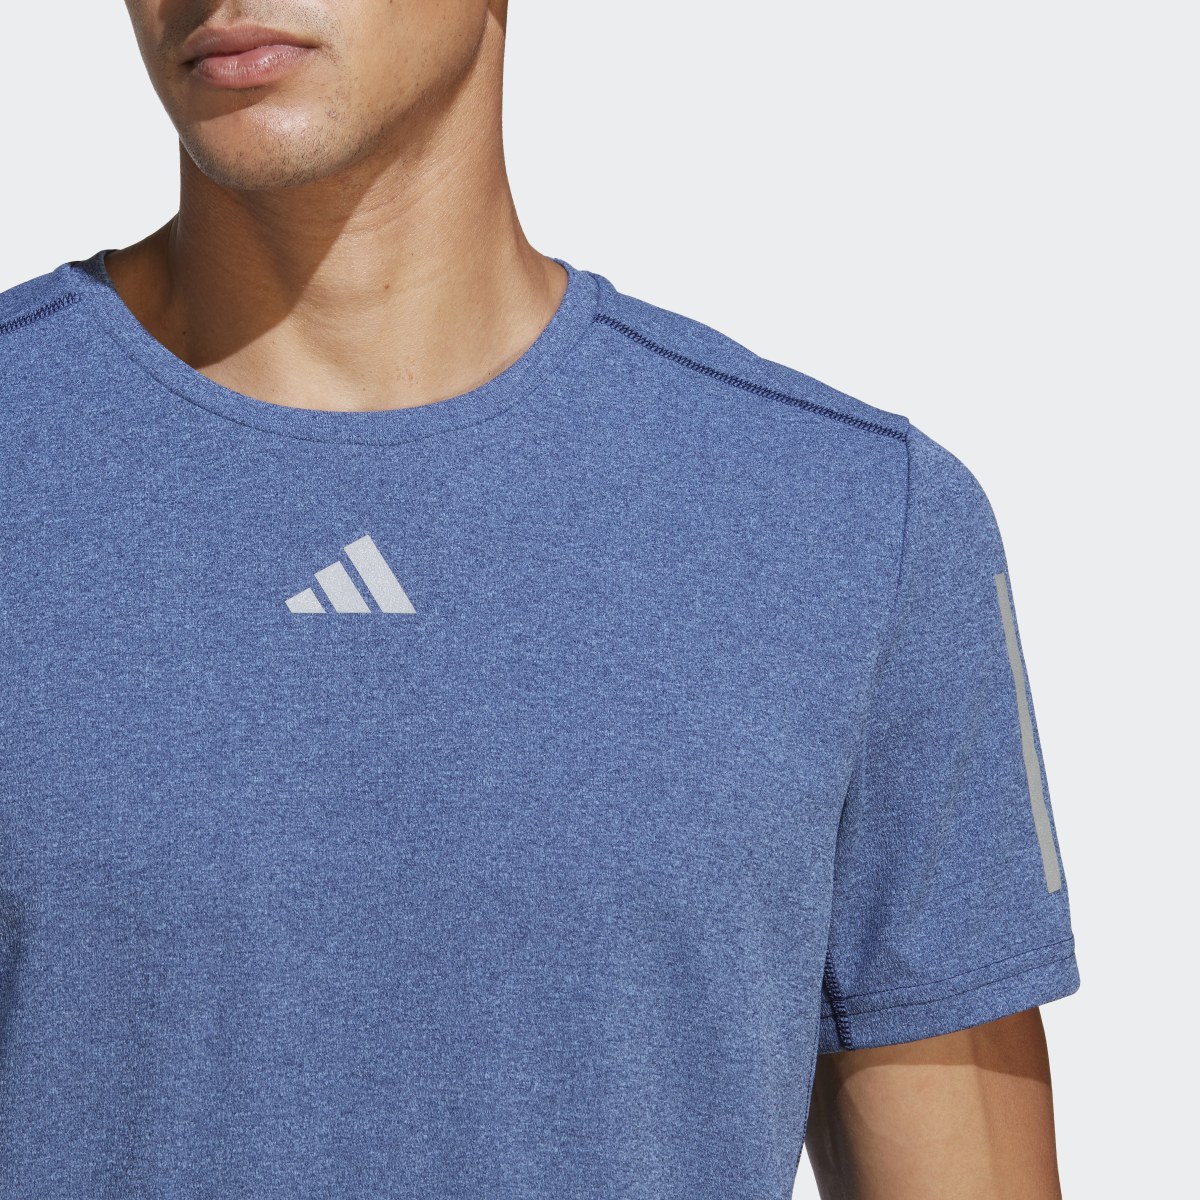 Adidas Own the Run Heather T-Shirt. 7